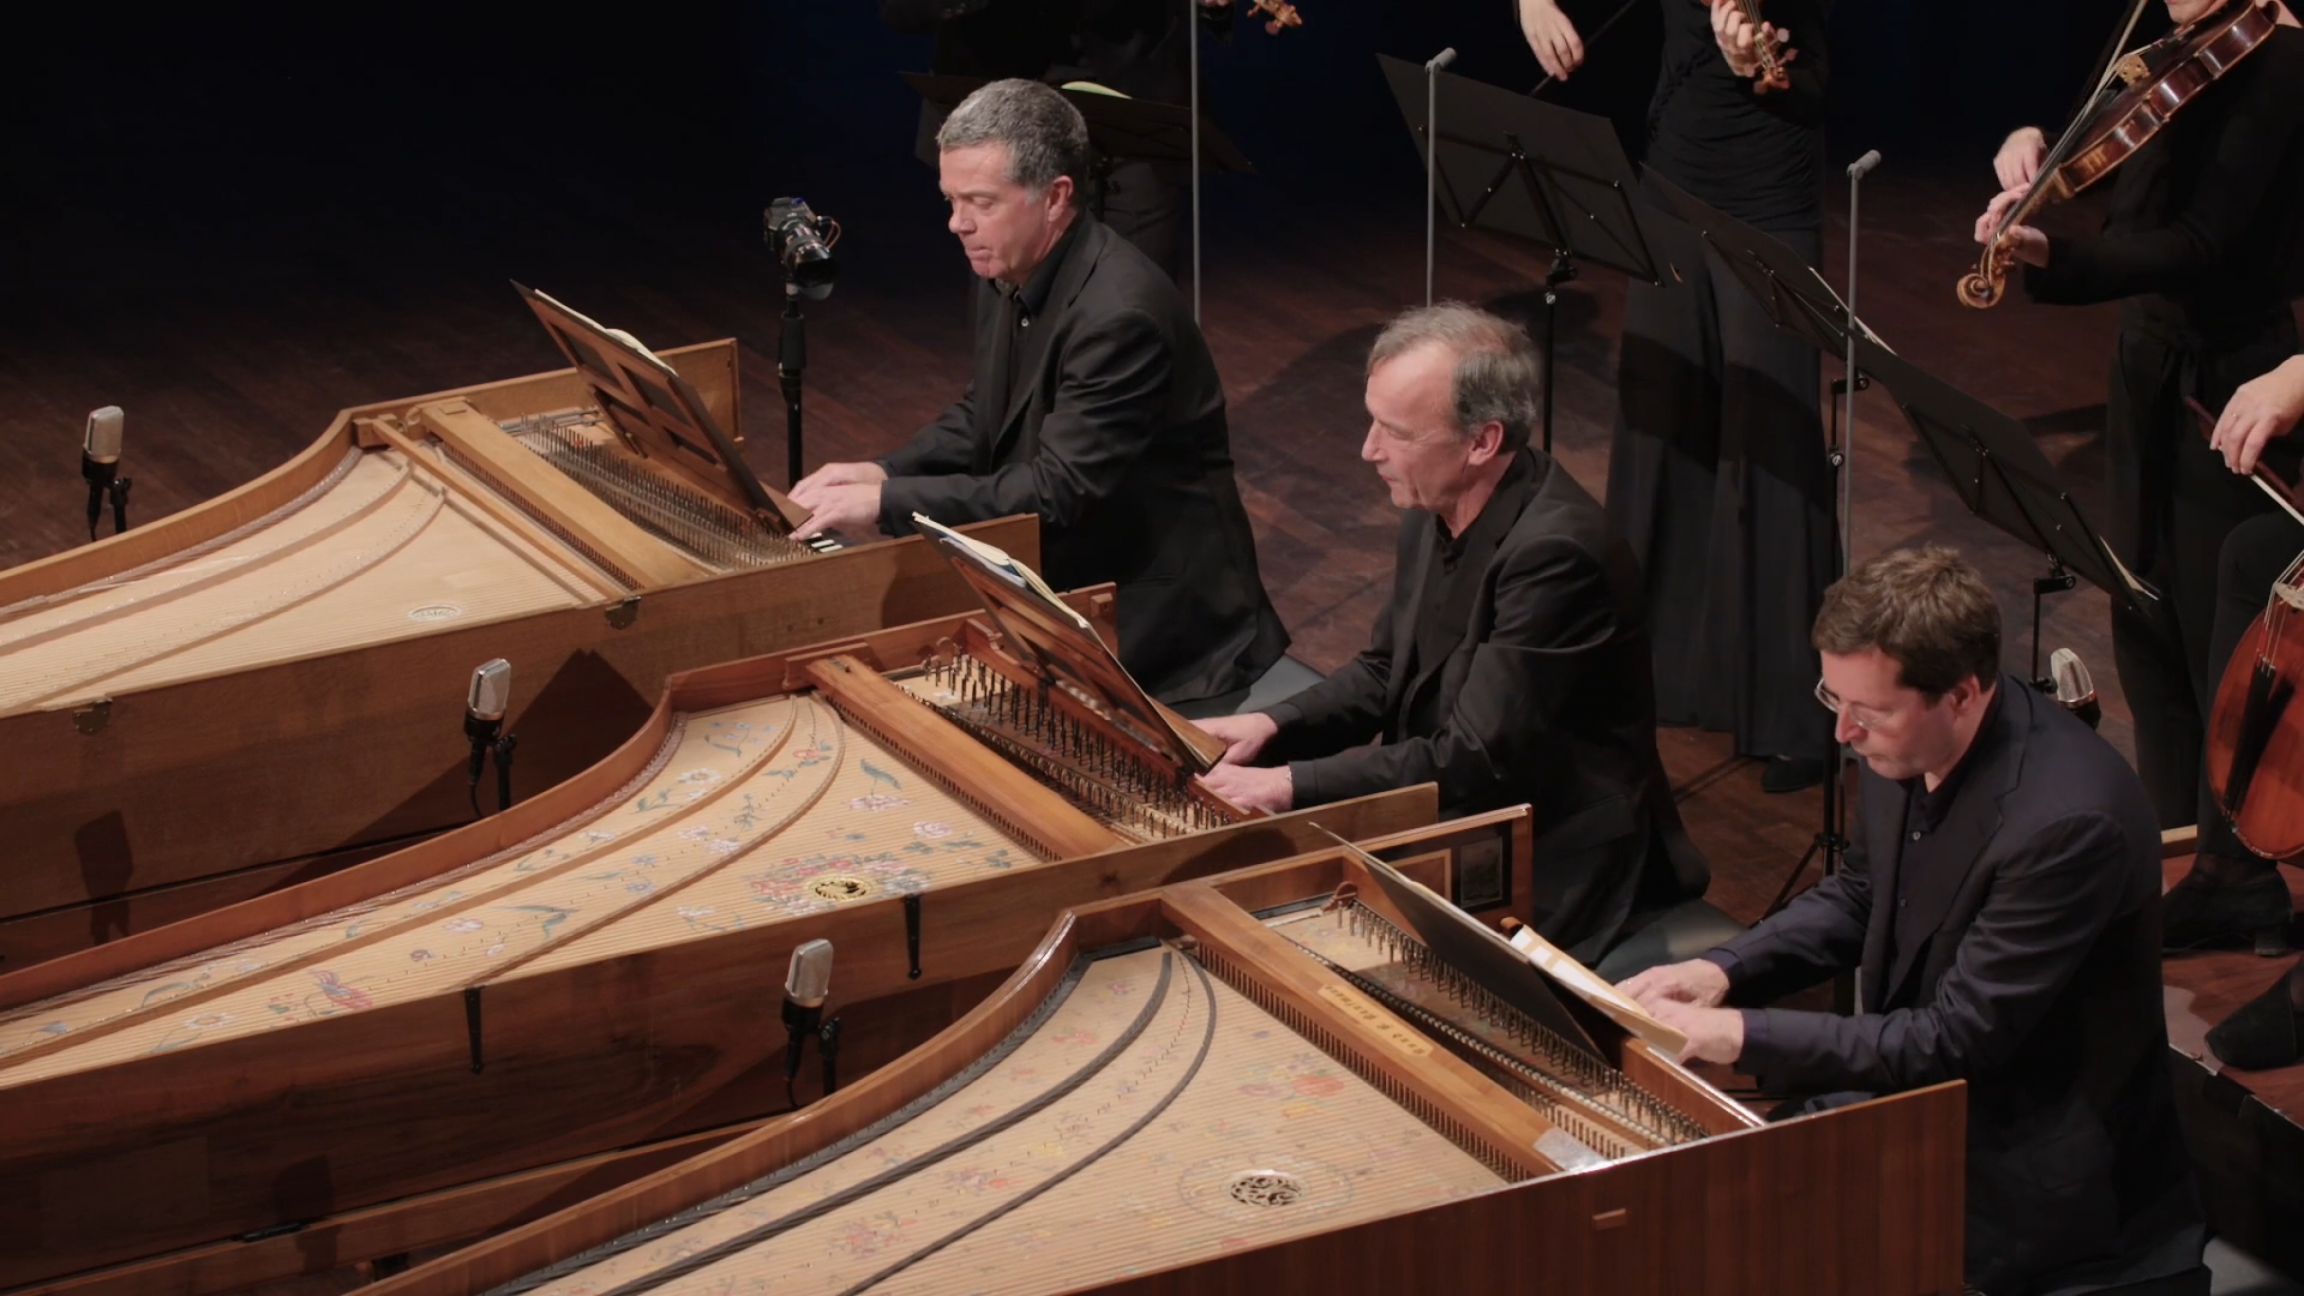 Concerto for three harpsichords in D minor